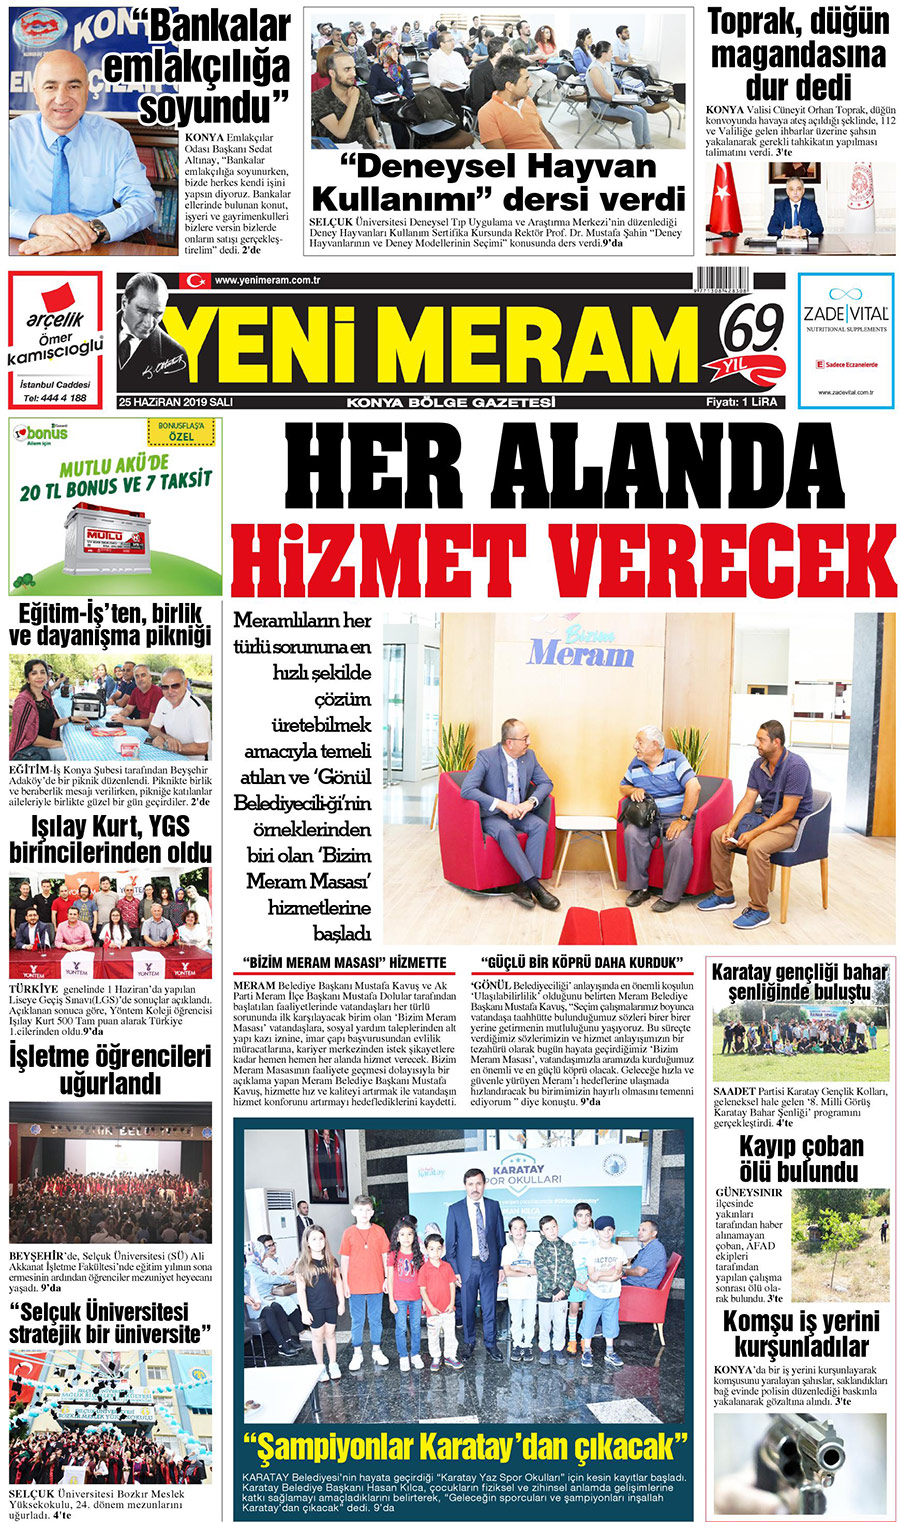 25 Haziran 2019 Yeni Meram Gazetesi